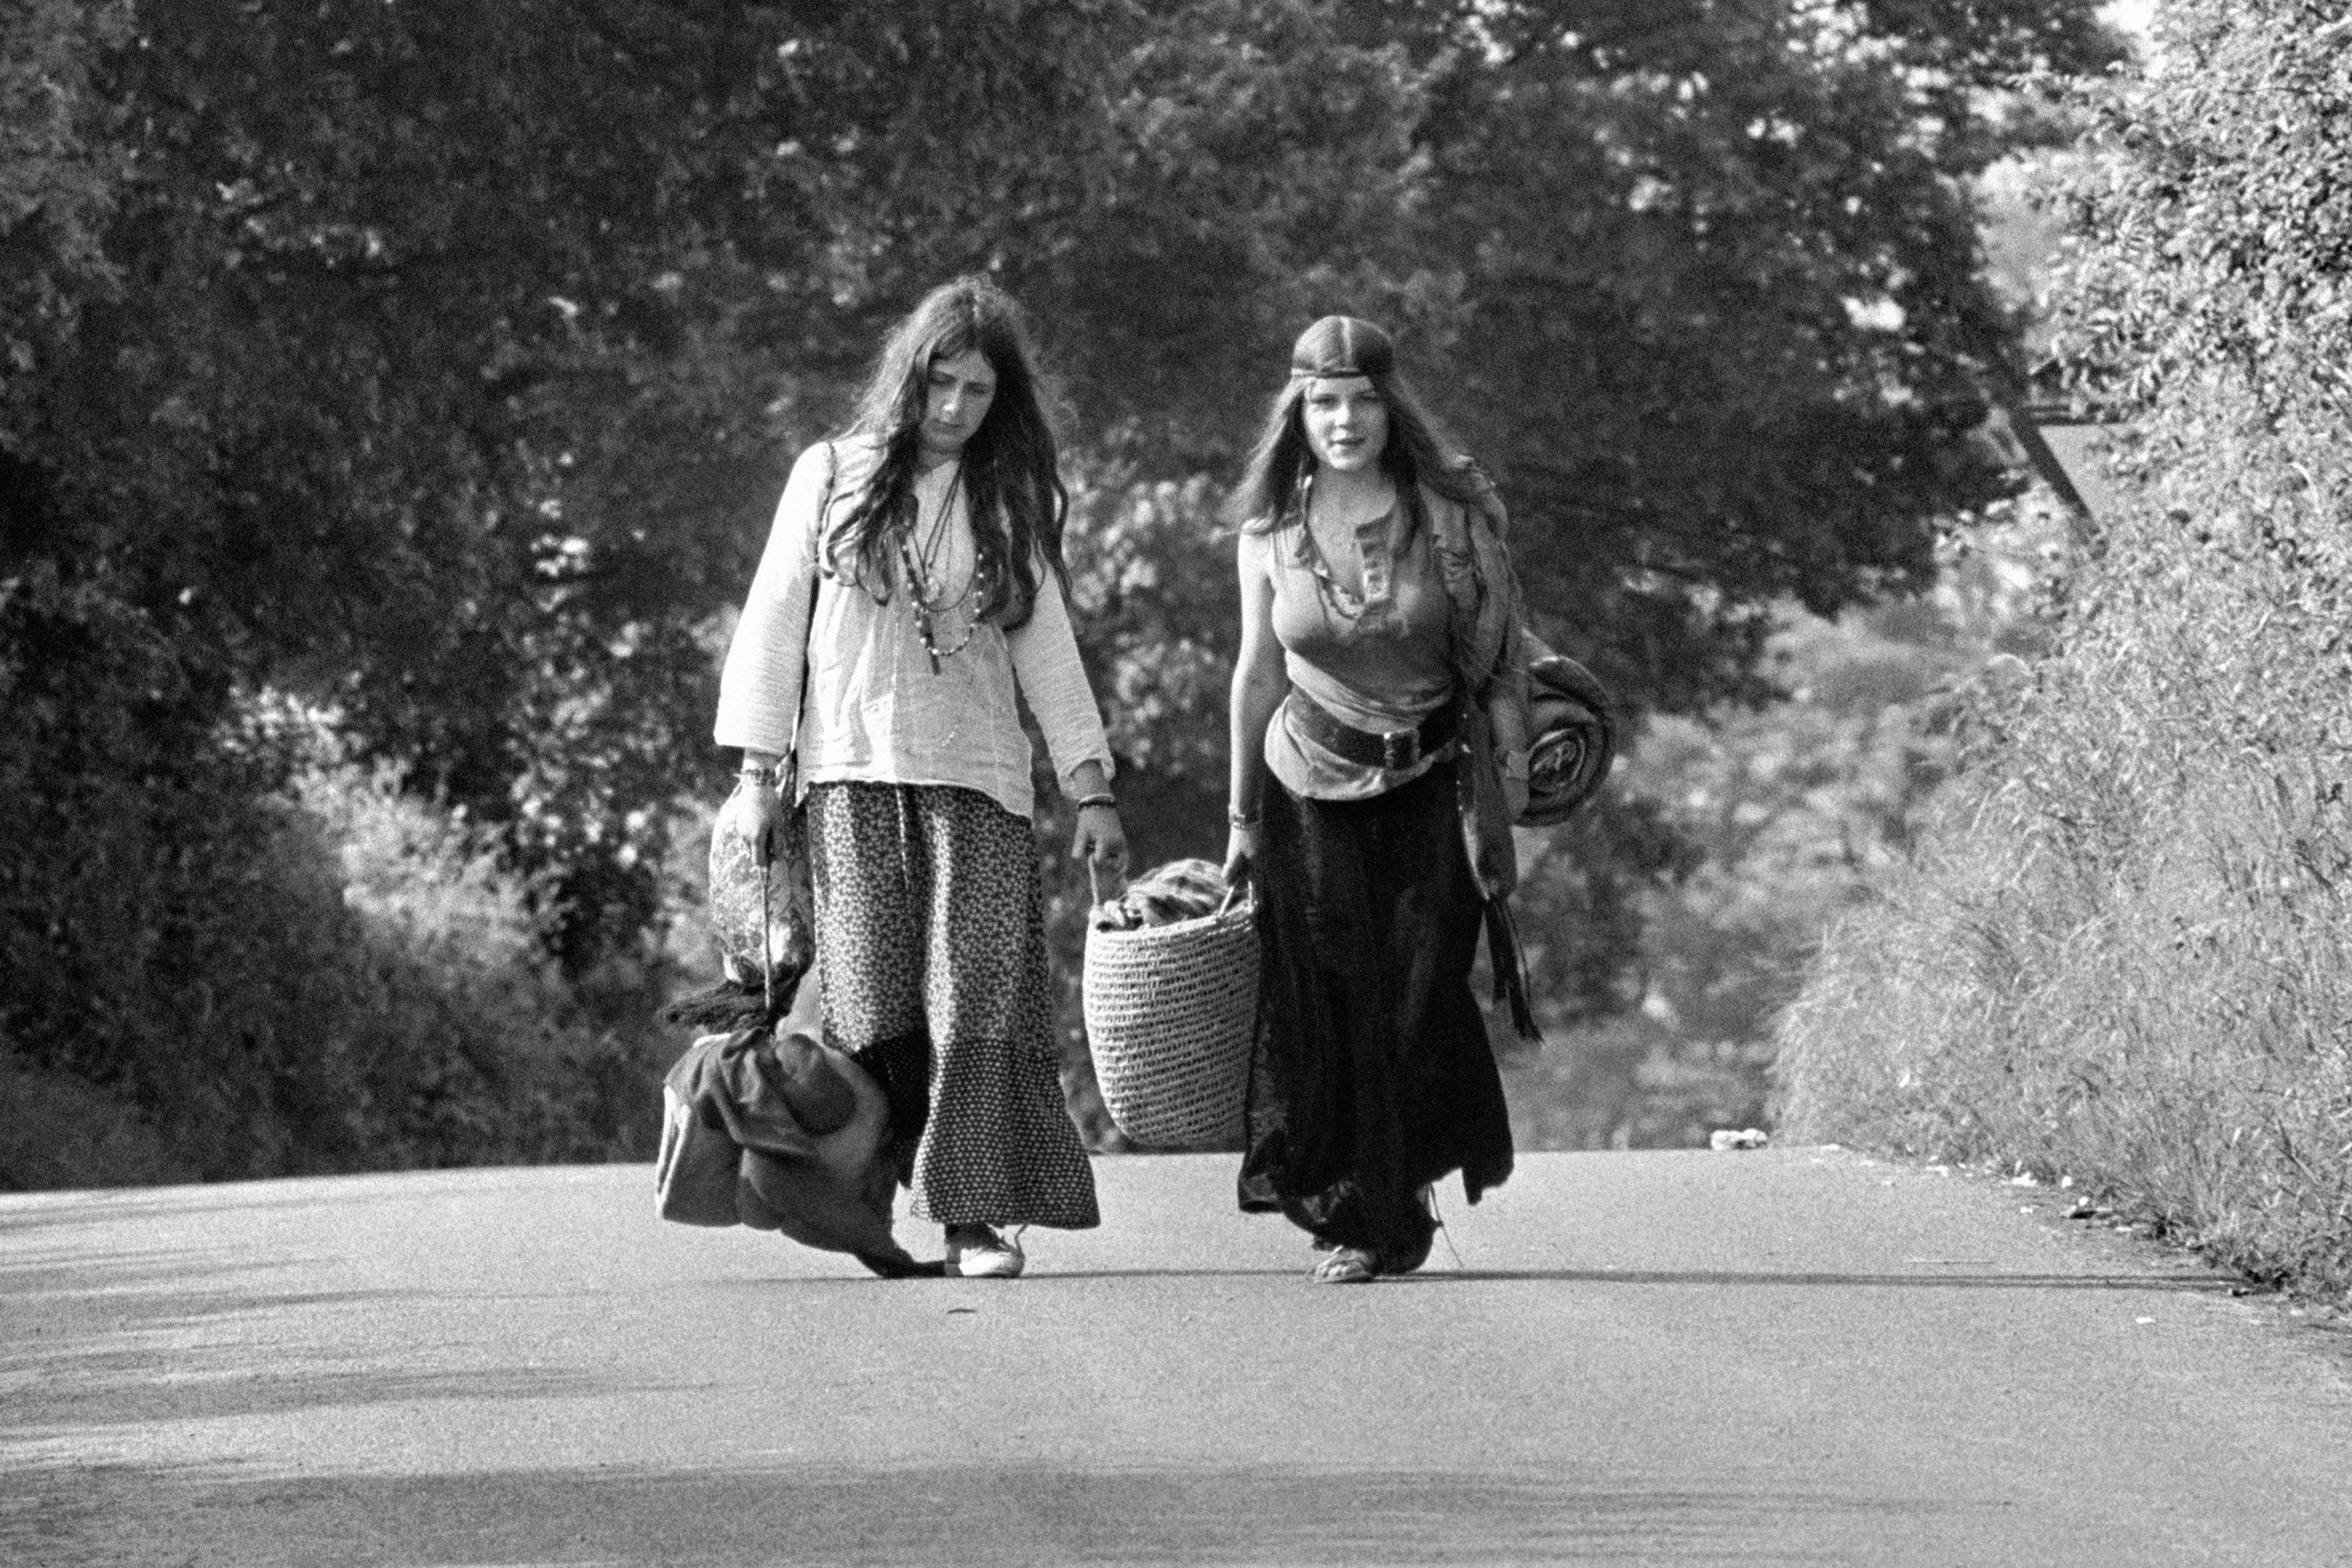 Two Glastonbury festival-goers in 1971